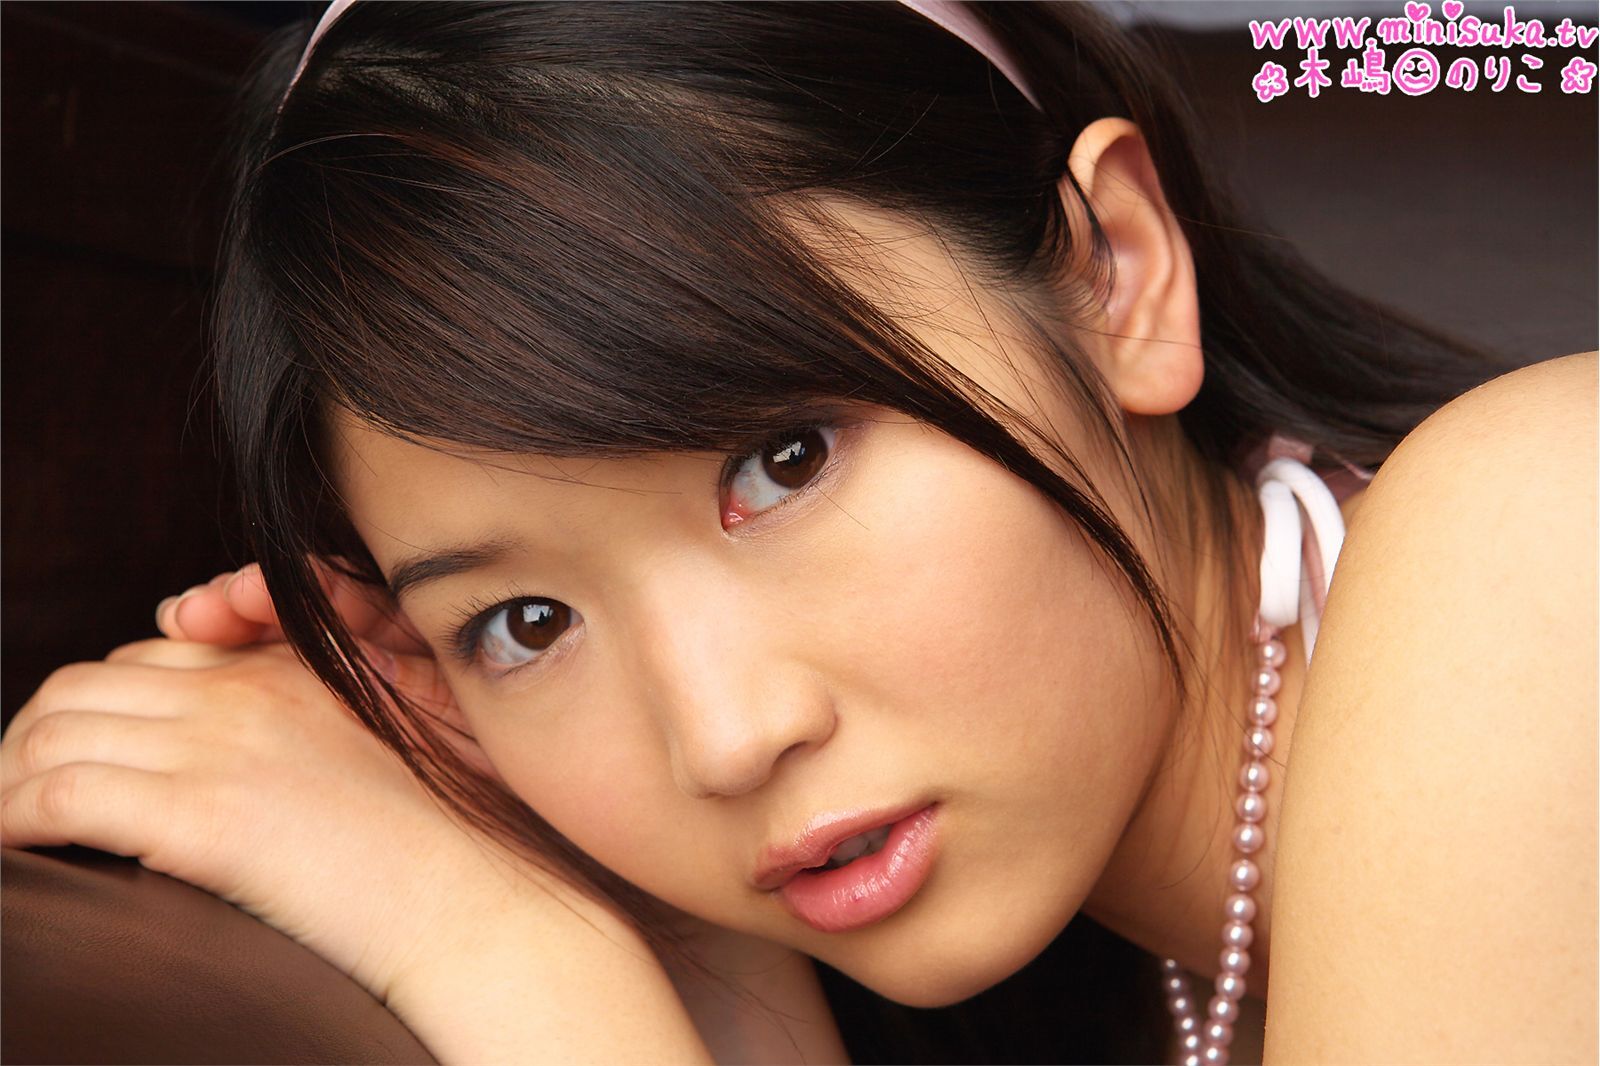 KIJIMA Noriko (2) Minisuka. TV Japanese high school girl